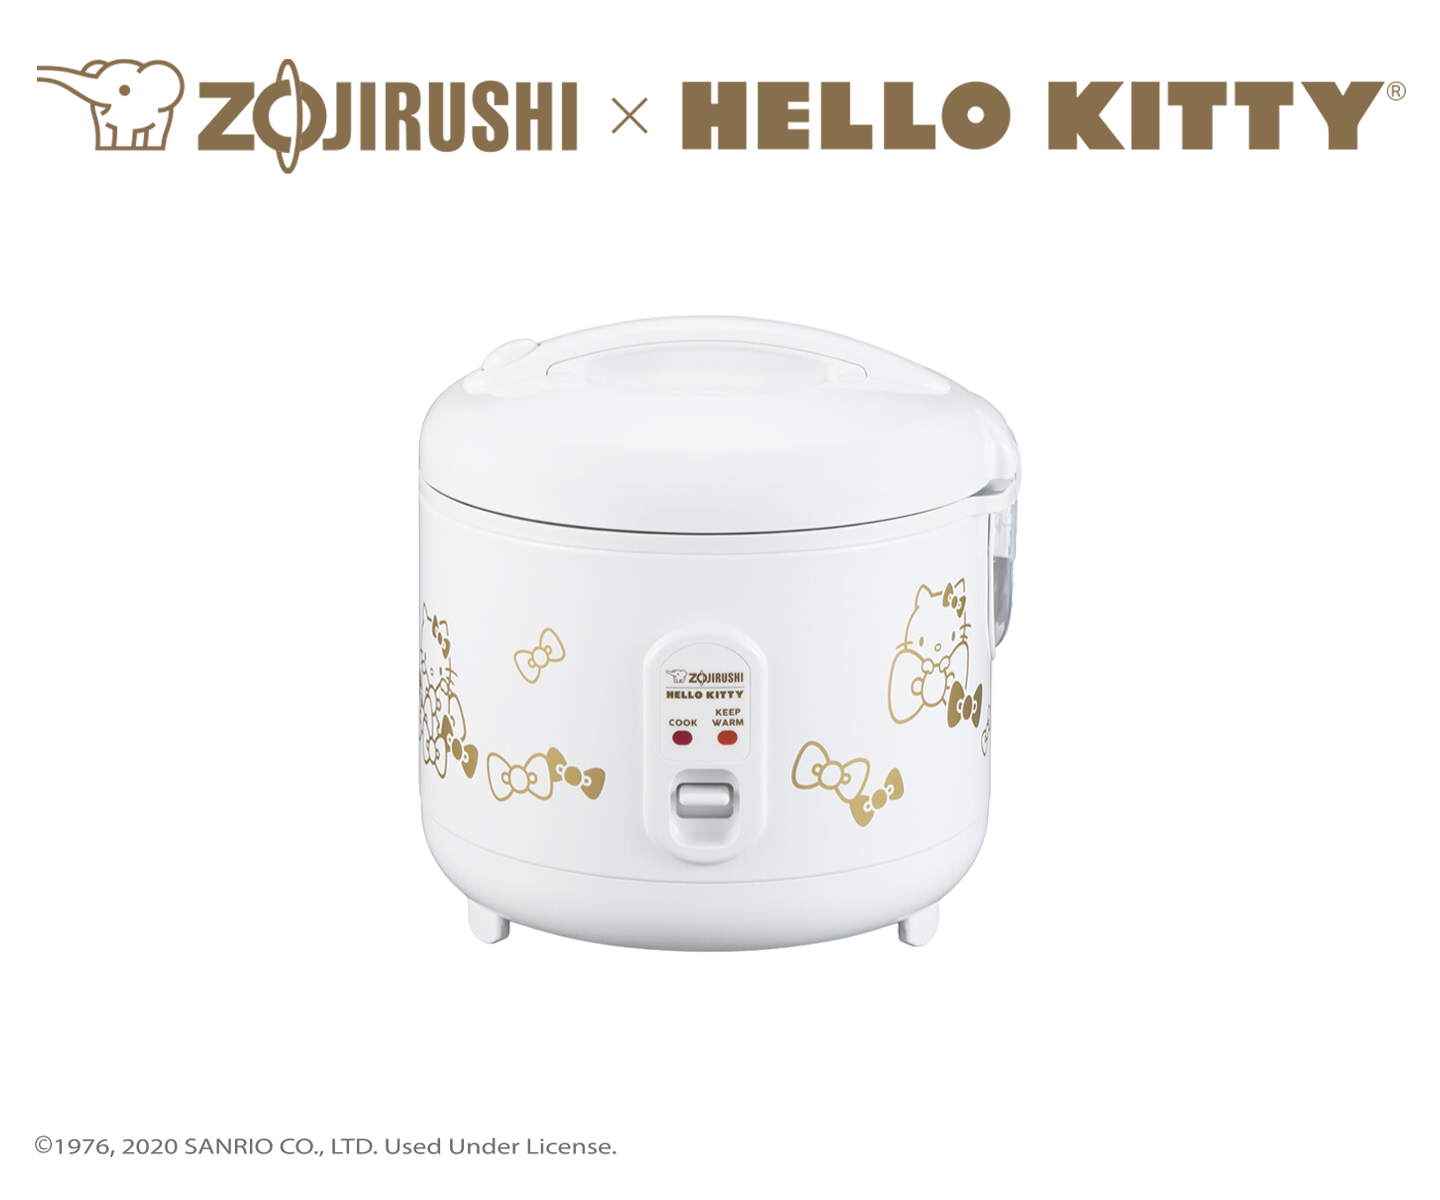 ZOJIRUSHI x HELLO KITTY® Automatic Rice Cooker